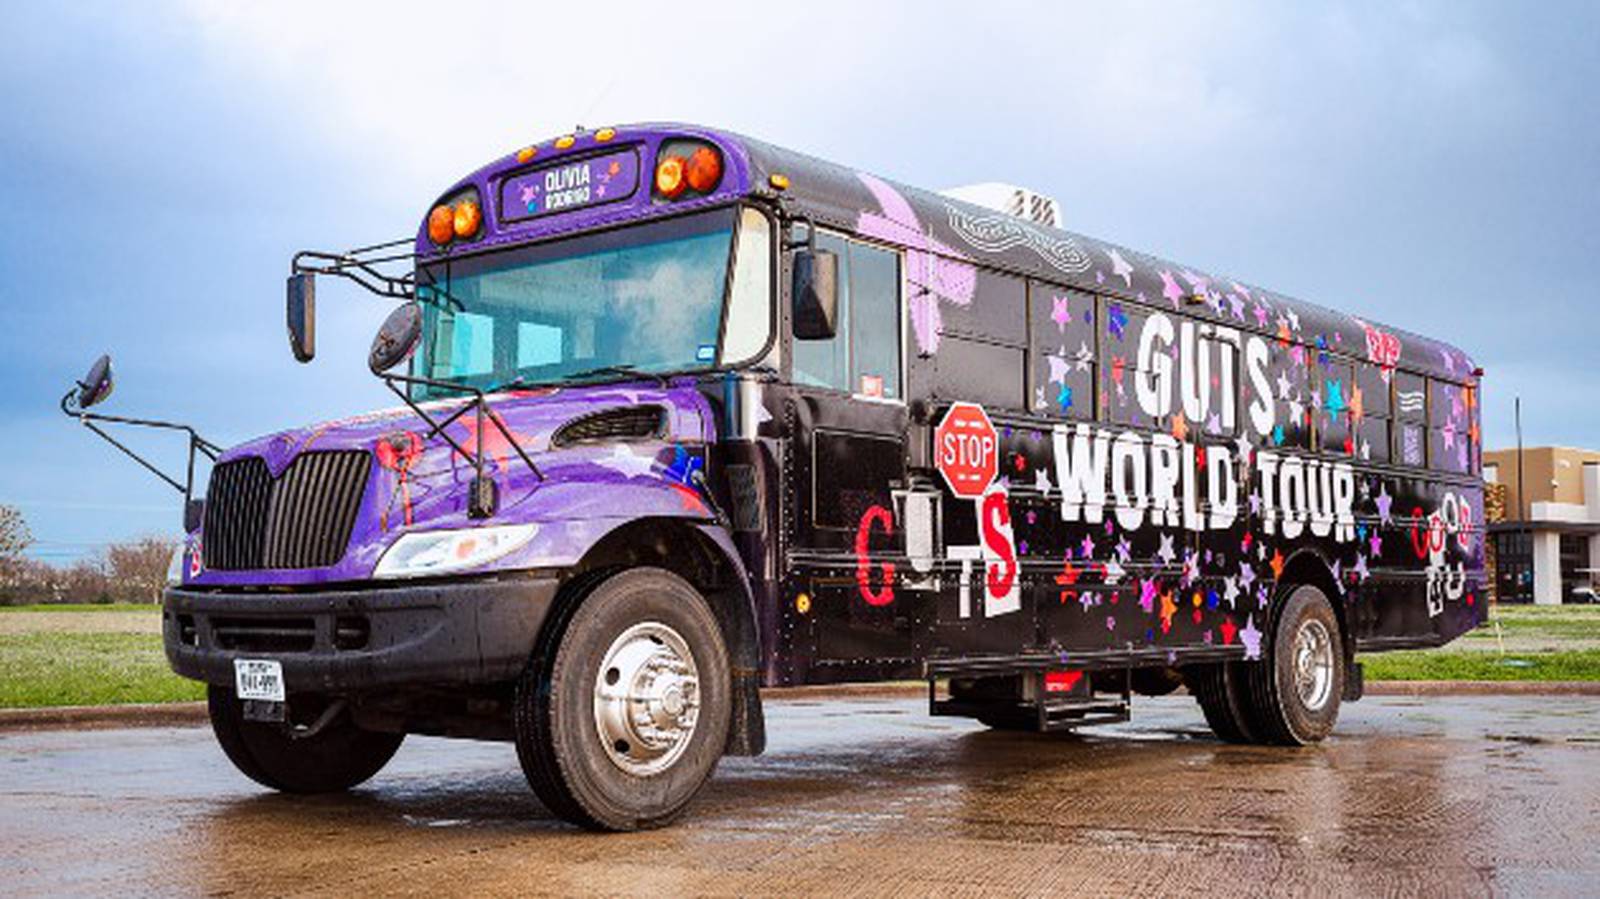 No Olivia Rodrigo tickets? Visit the 'GUTS' World Tour Bus Experience